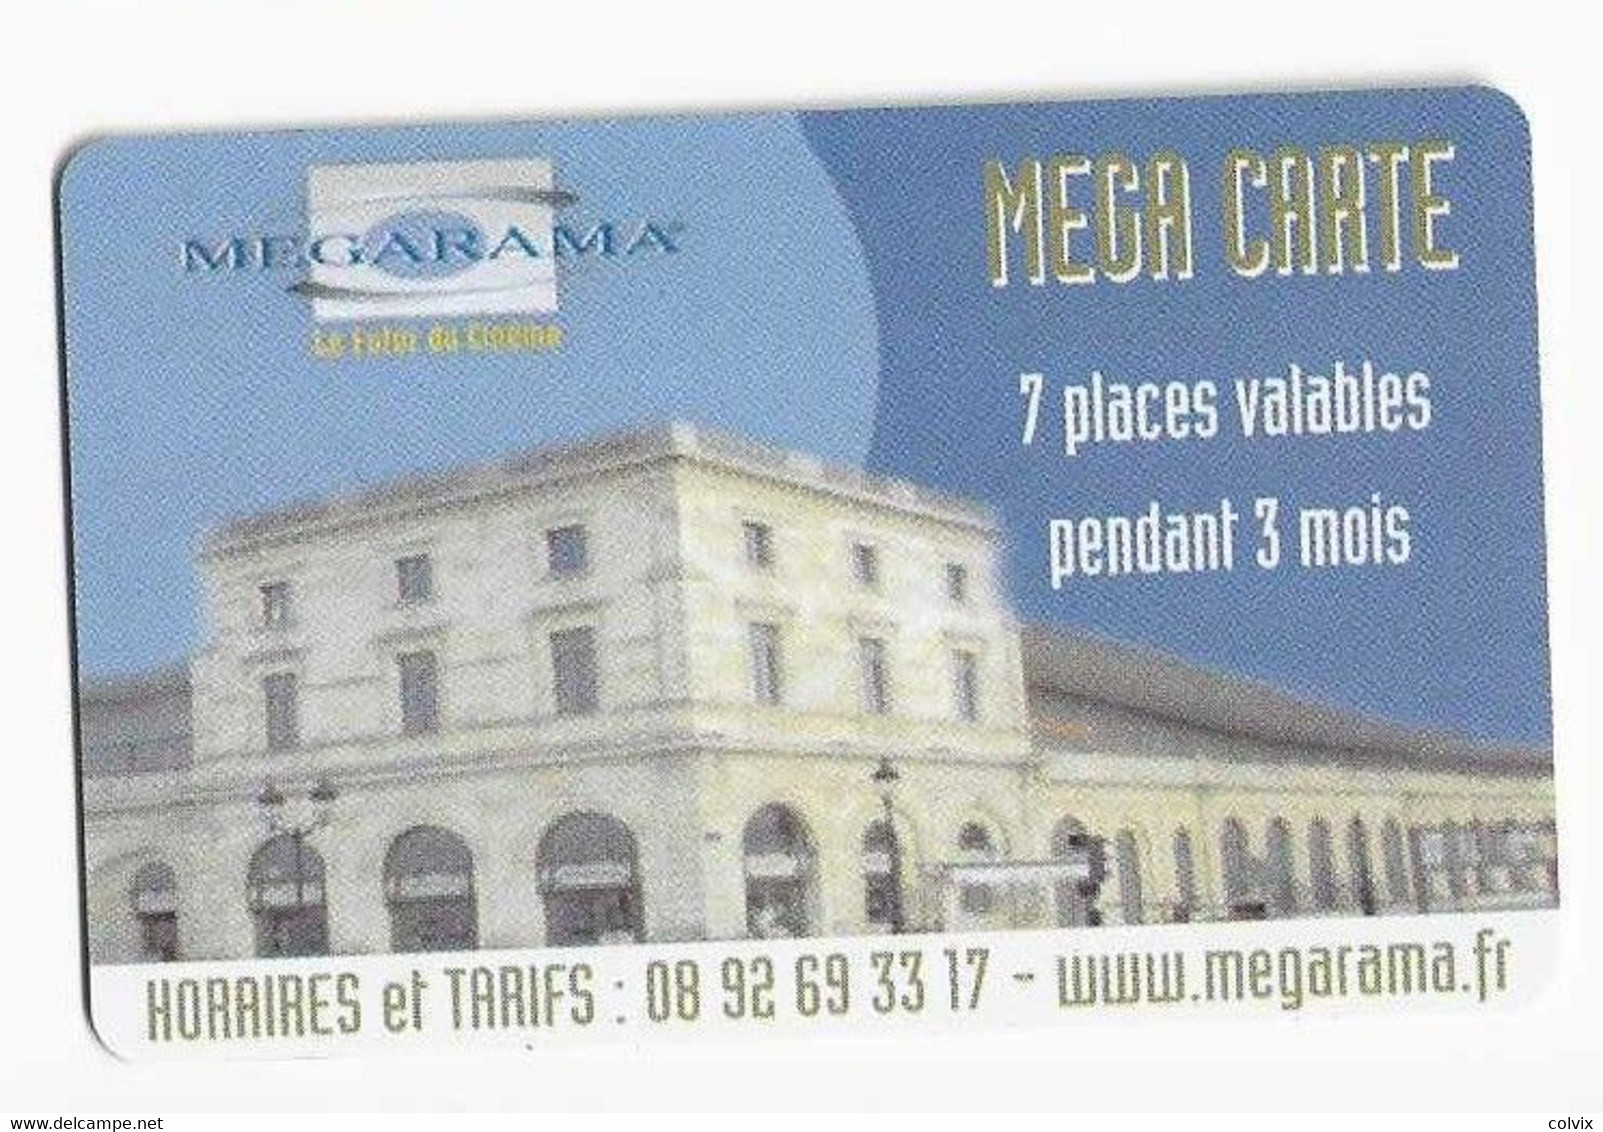 FRANCE CARTE CINEMA MEGARAMA BORDEAUX - Biglietti Cinema